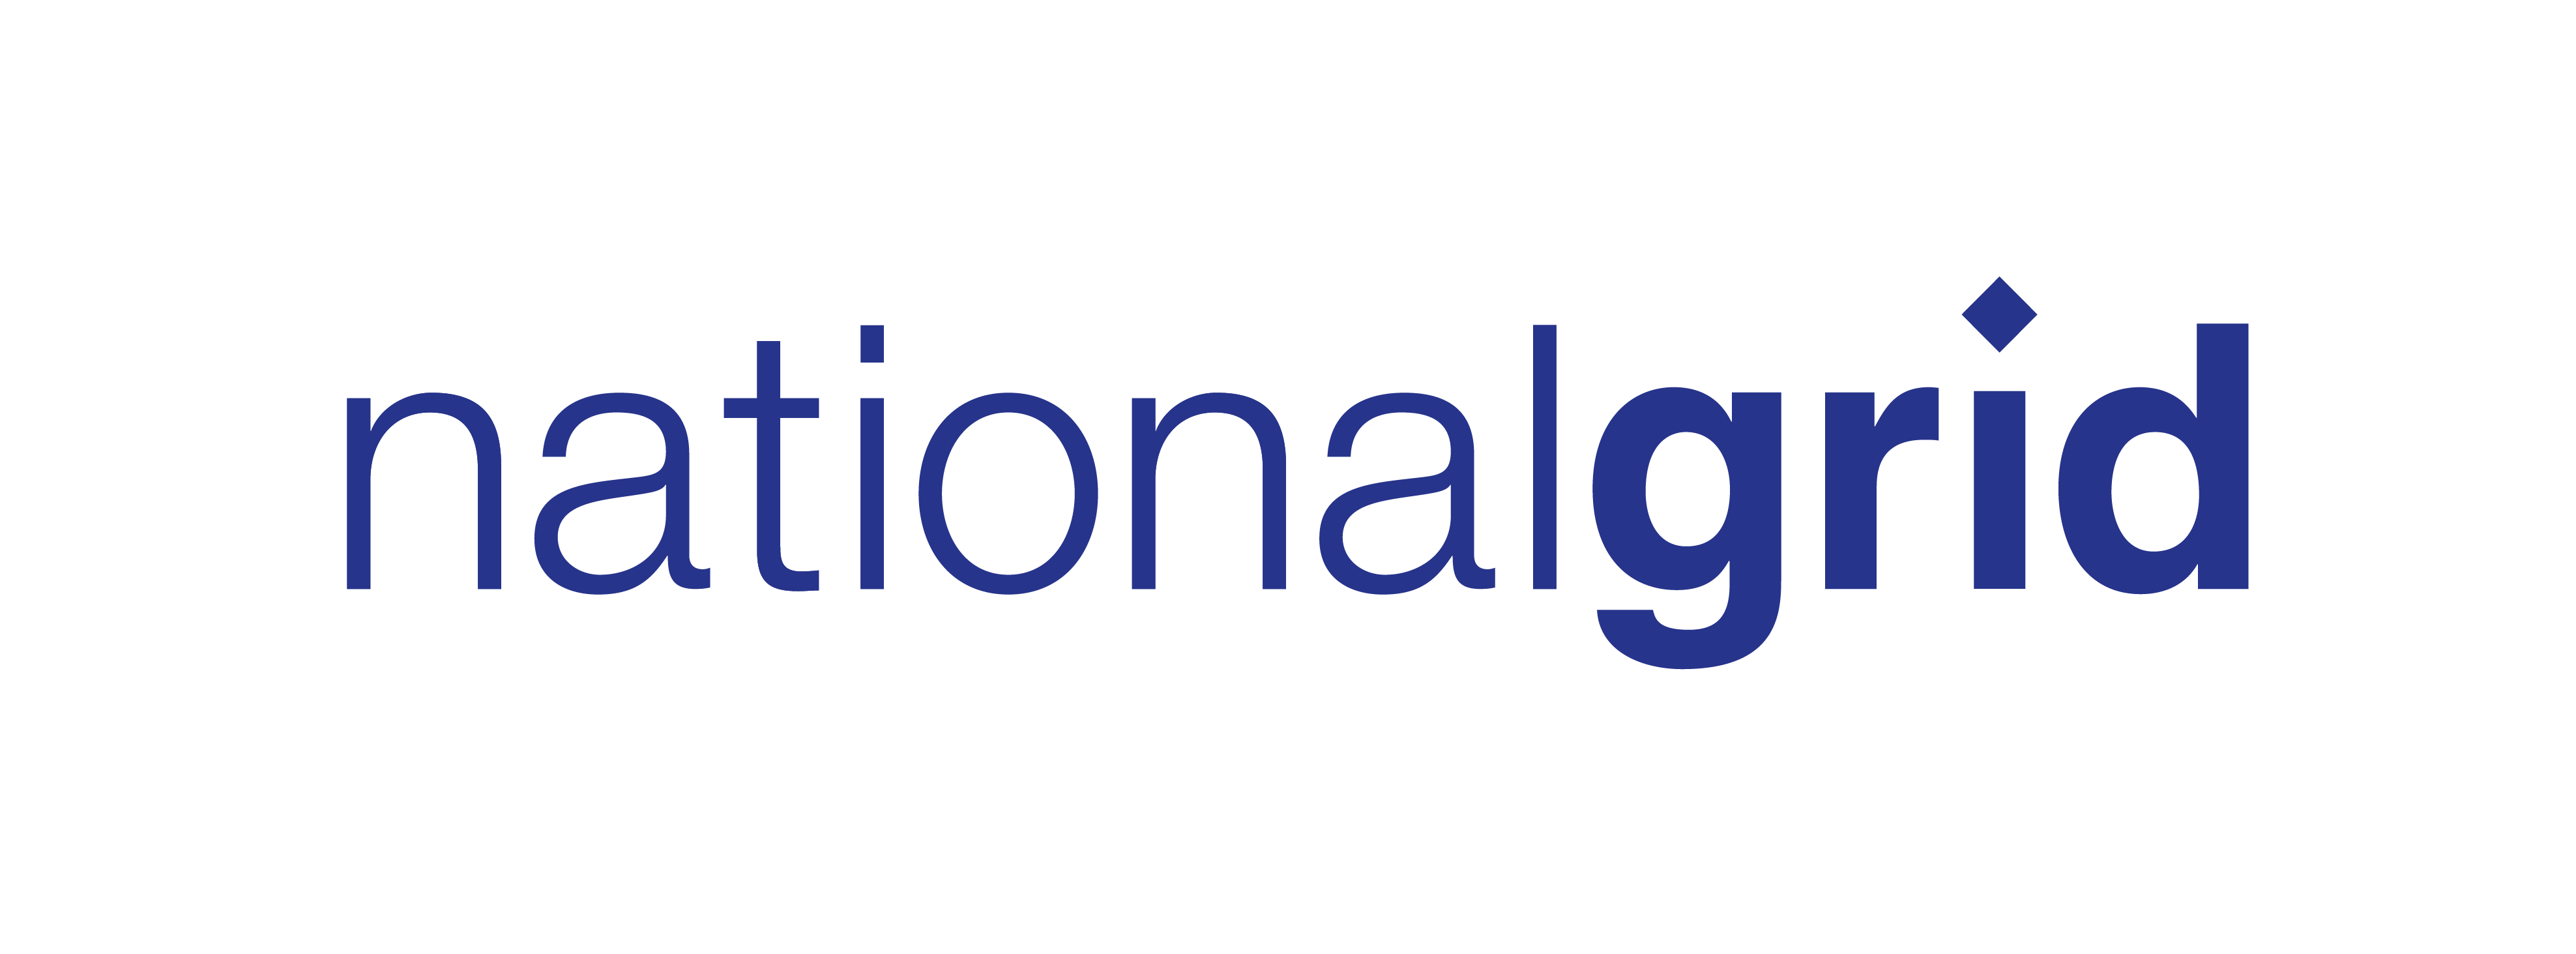 National Grid logo - blue text